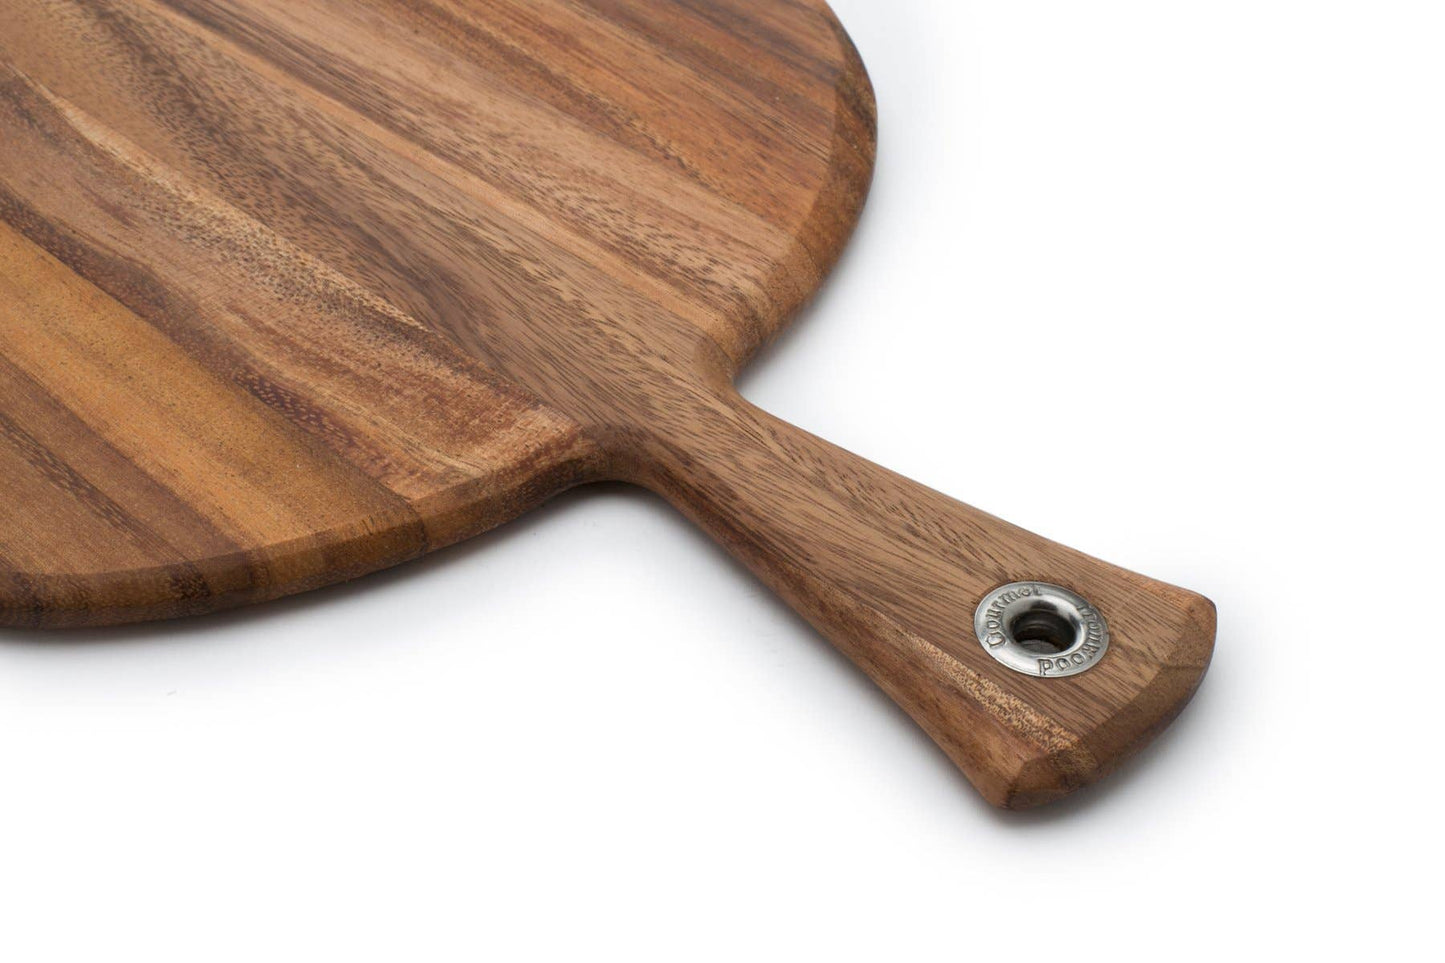 Round Provencale Paddle Board, Acacia Wood